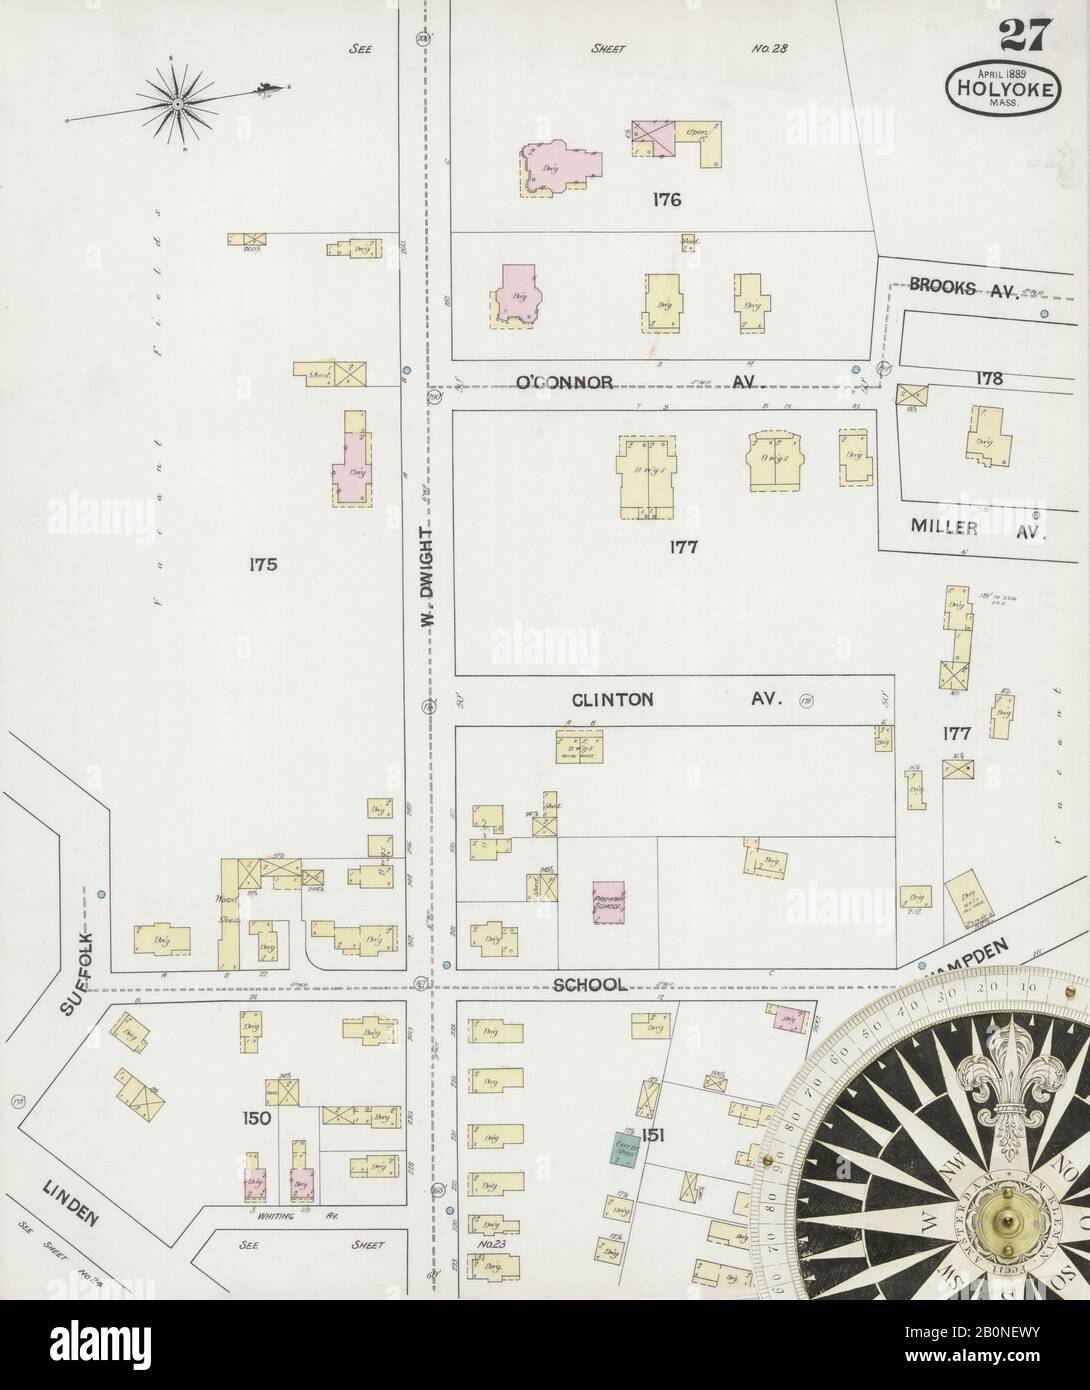 Bild 27 von Sanborn Fire Insurance Map aus Holyoke, Hampden County, Massachusetts. Apr. 30 Blatt(e), Amerika, Straßenkarte mit einem Kompass Aus Dem 19. Jahrhundert Stockfoto